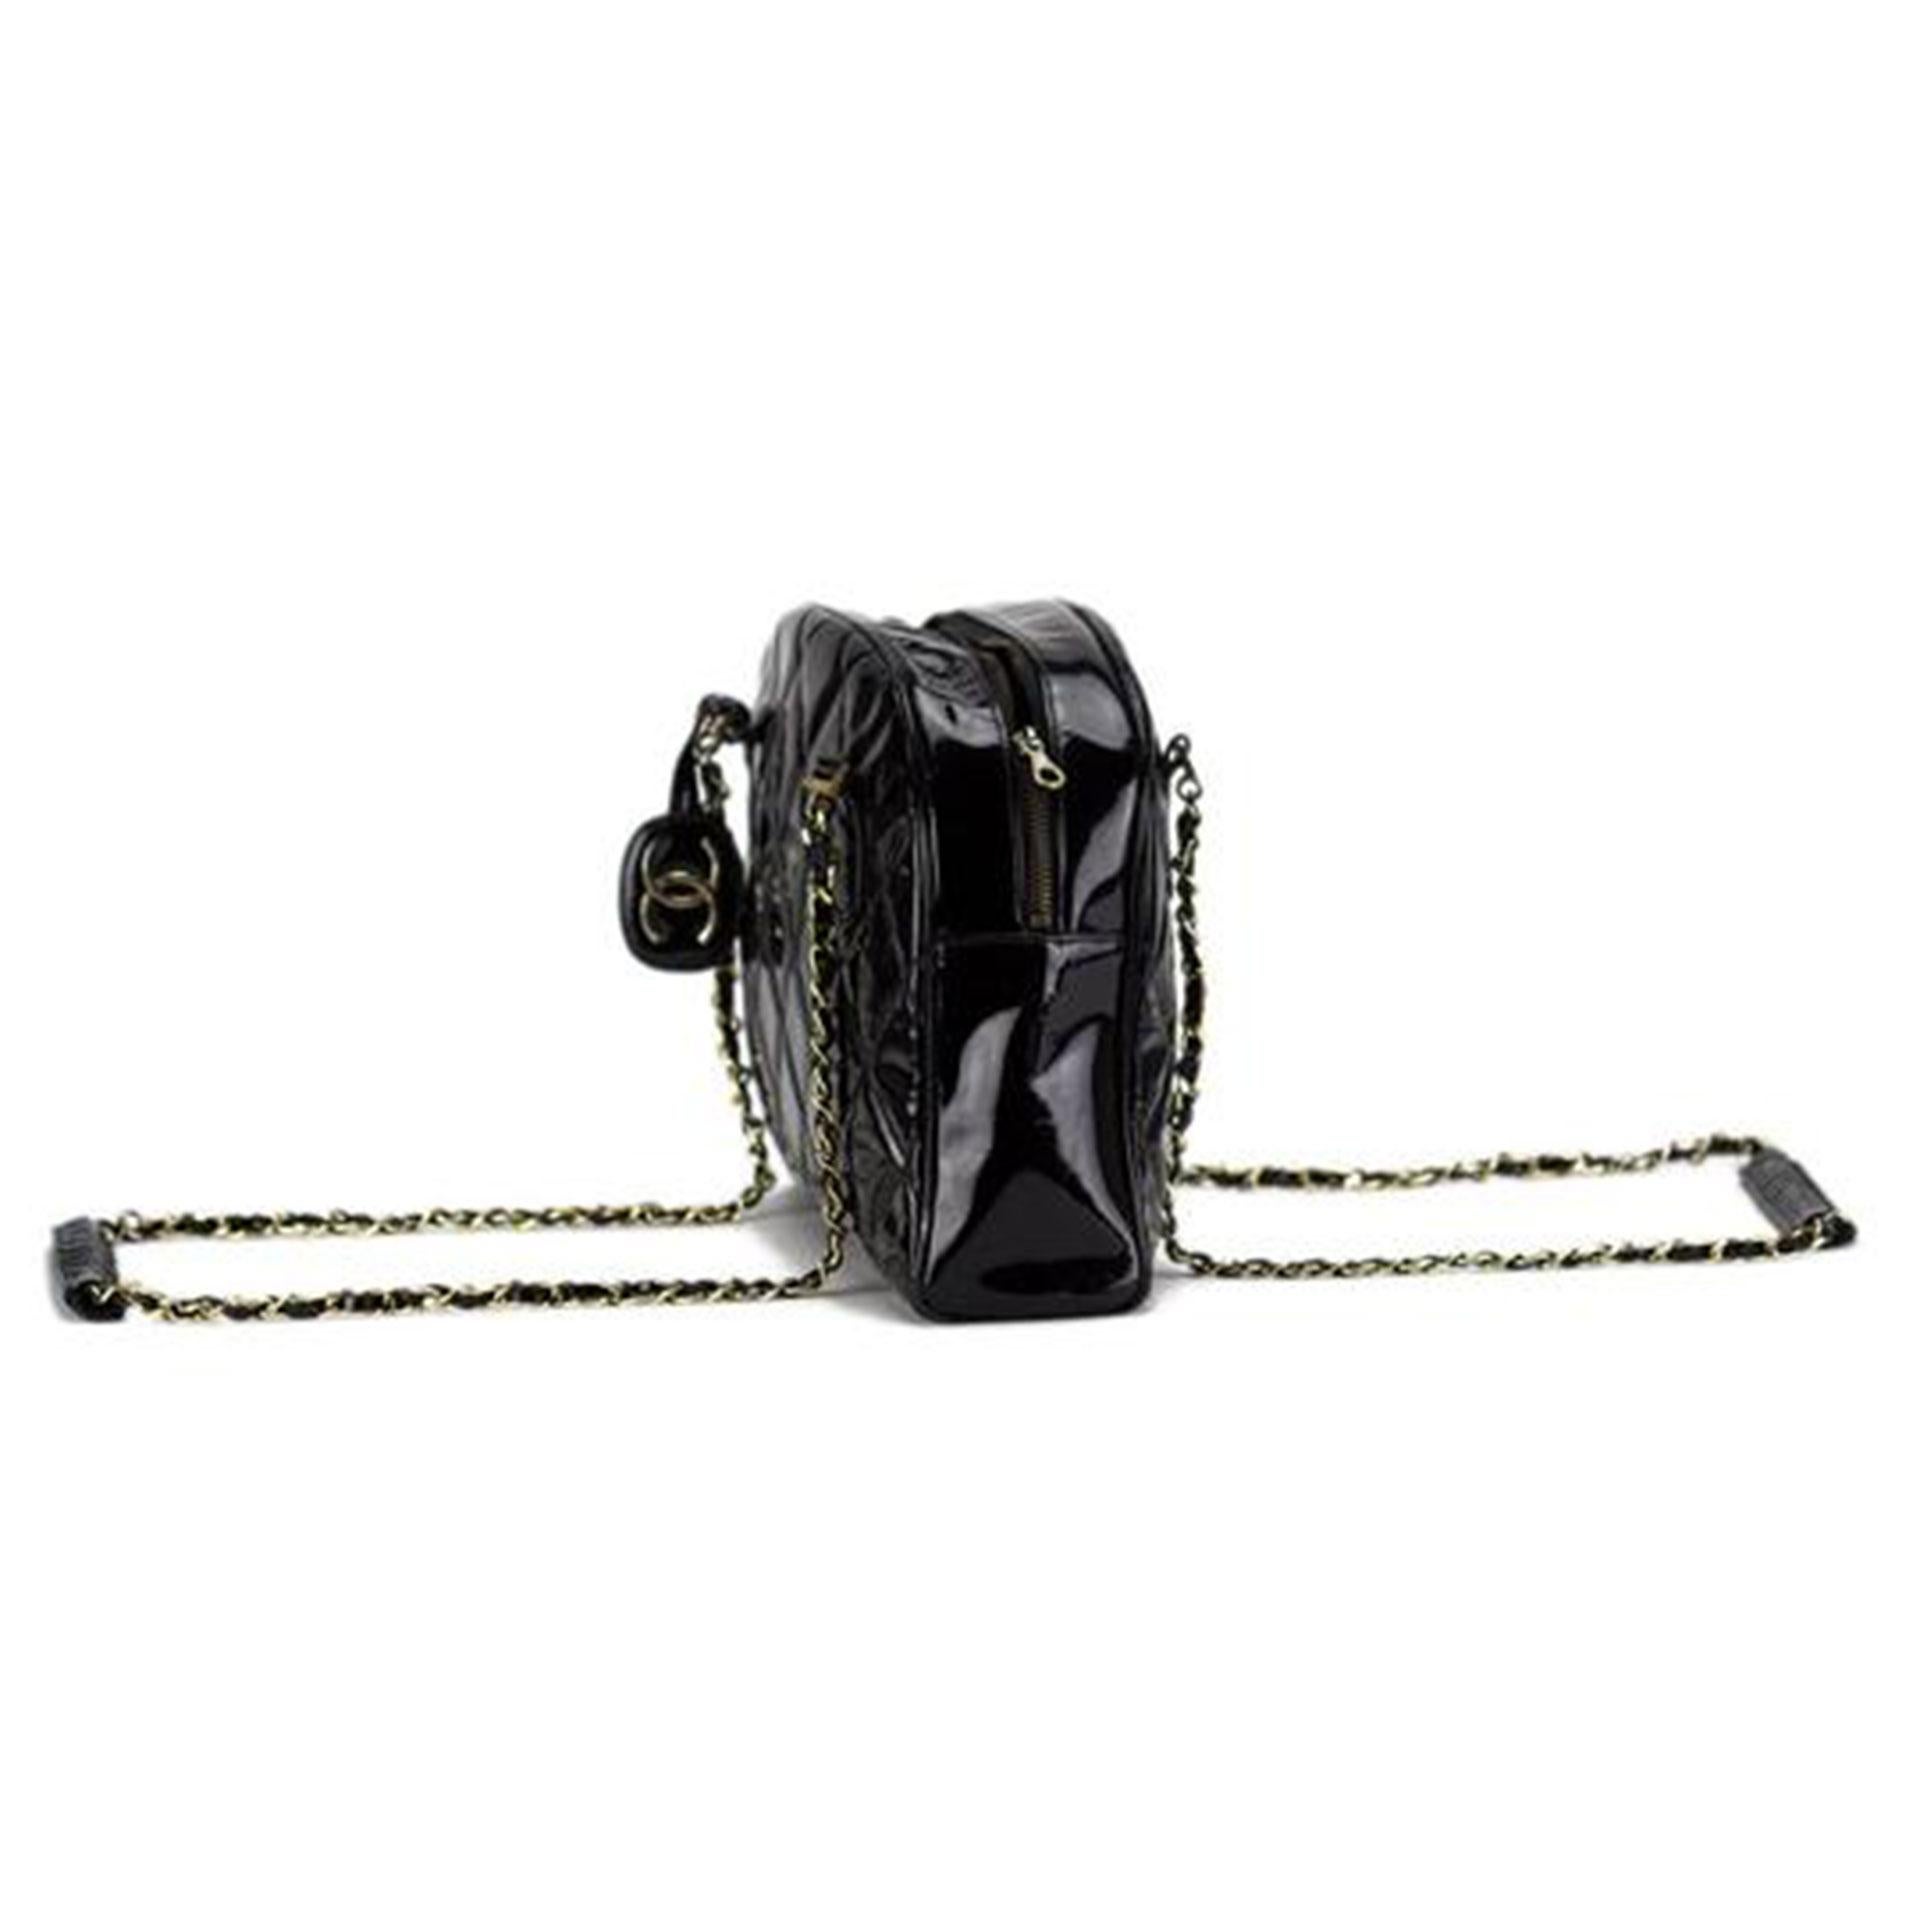 Chanel Shopping Tote Quilted Very Rare Limited Edition Black Patent Leather Bag Bon état - En vente à Miami, FL